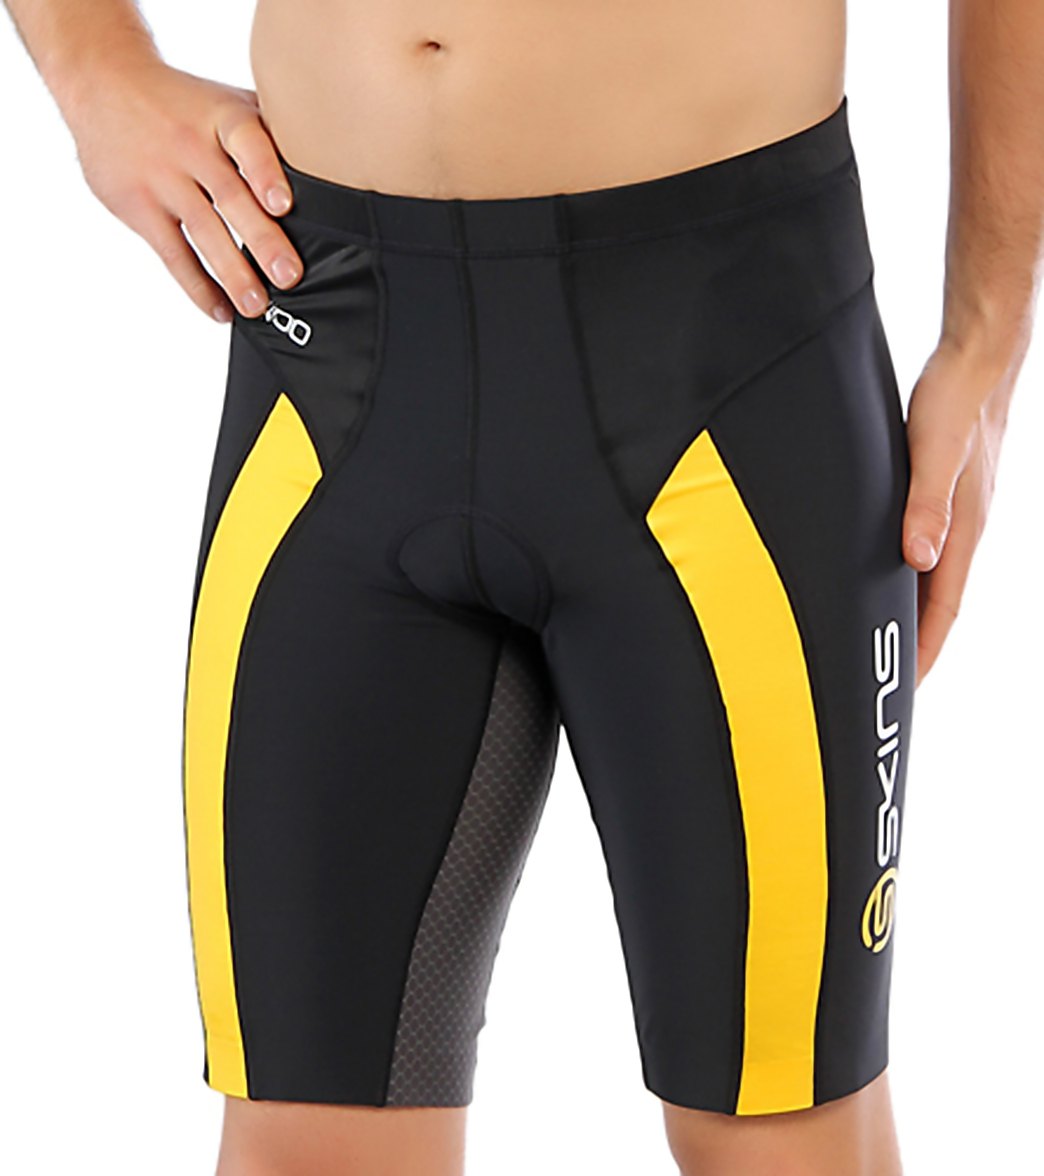 Download SKINS Men's TRI400 Compression Tri Shorts at SwimOutlet ...